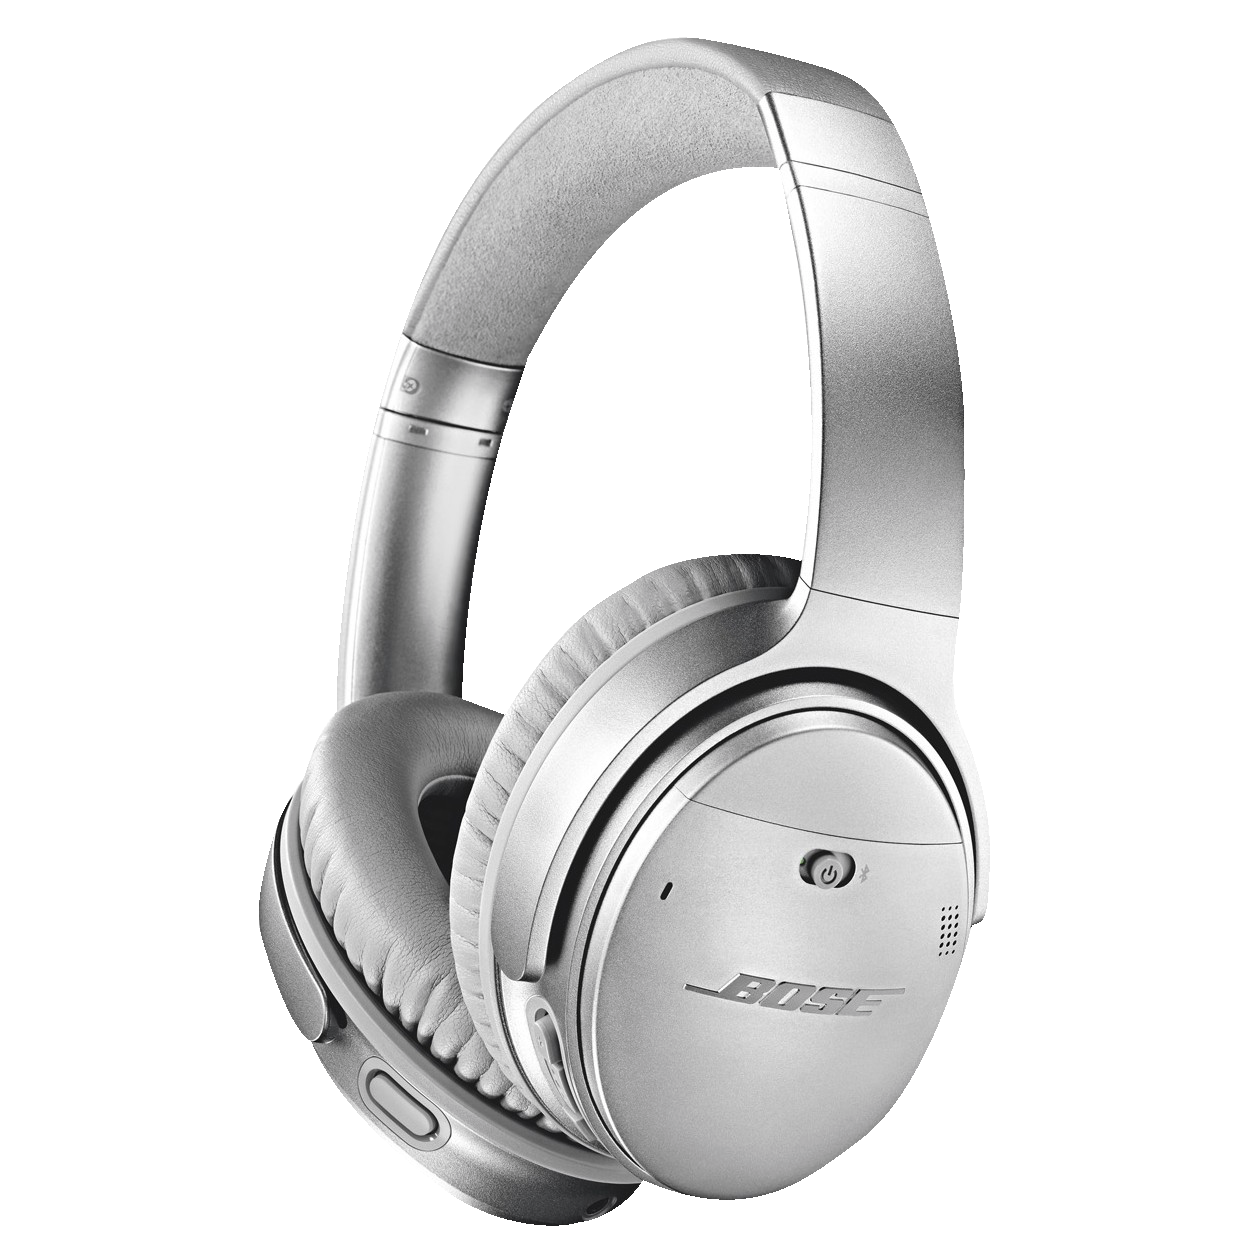 Bose QuietComfort 35 QC35 II (2) trådlösa hörlurar (silver) - Hörlurar -  Elgiganten